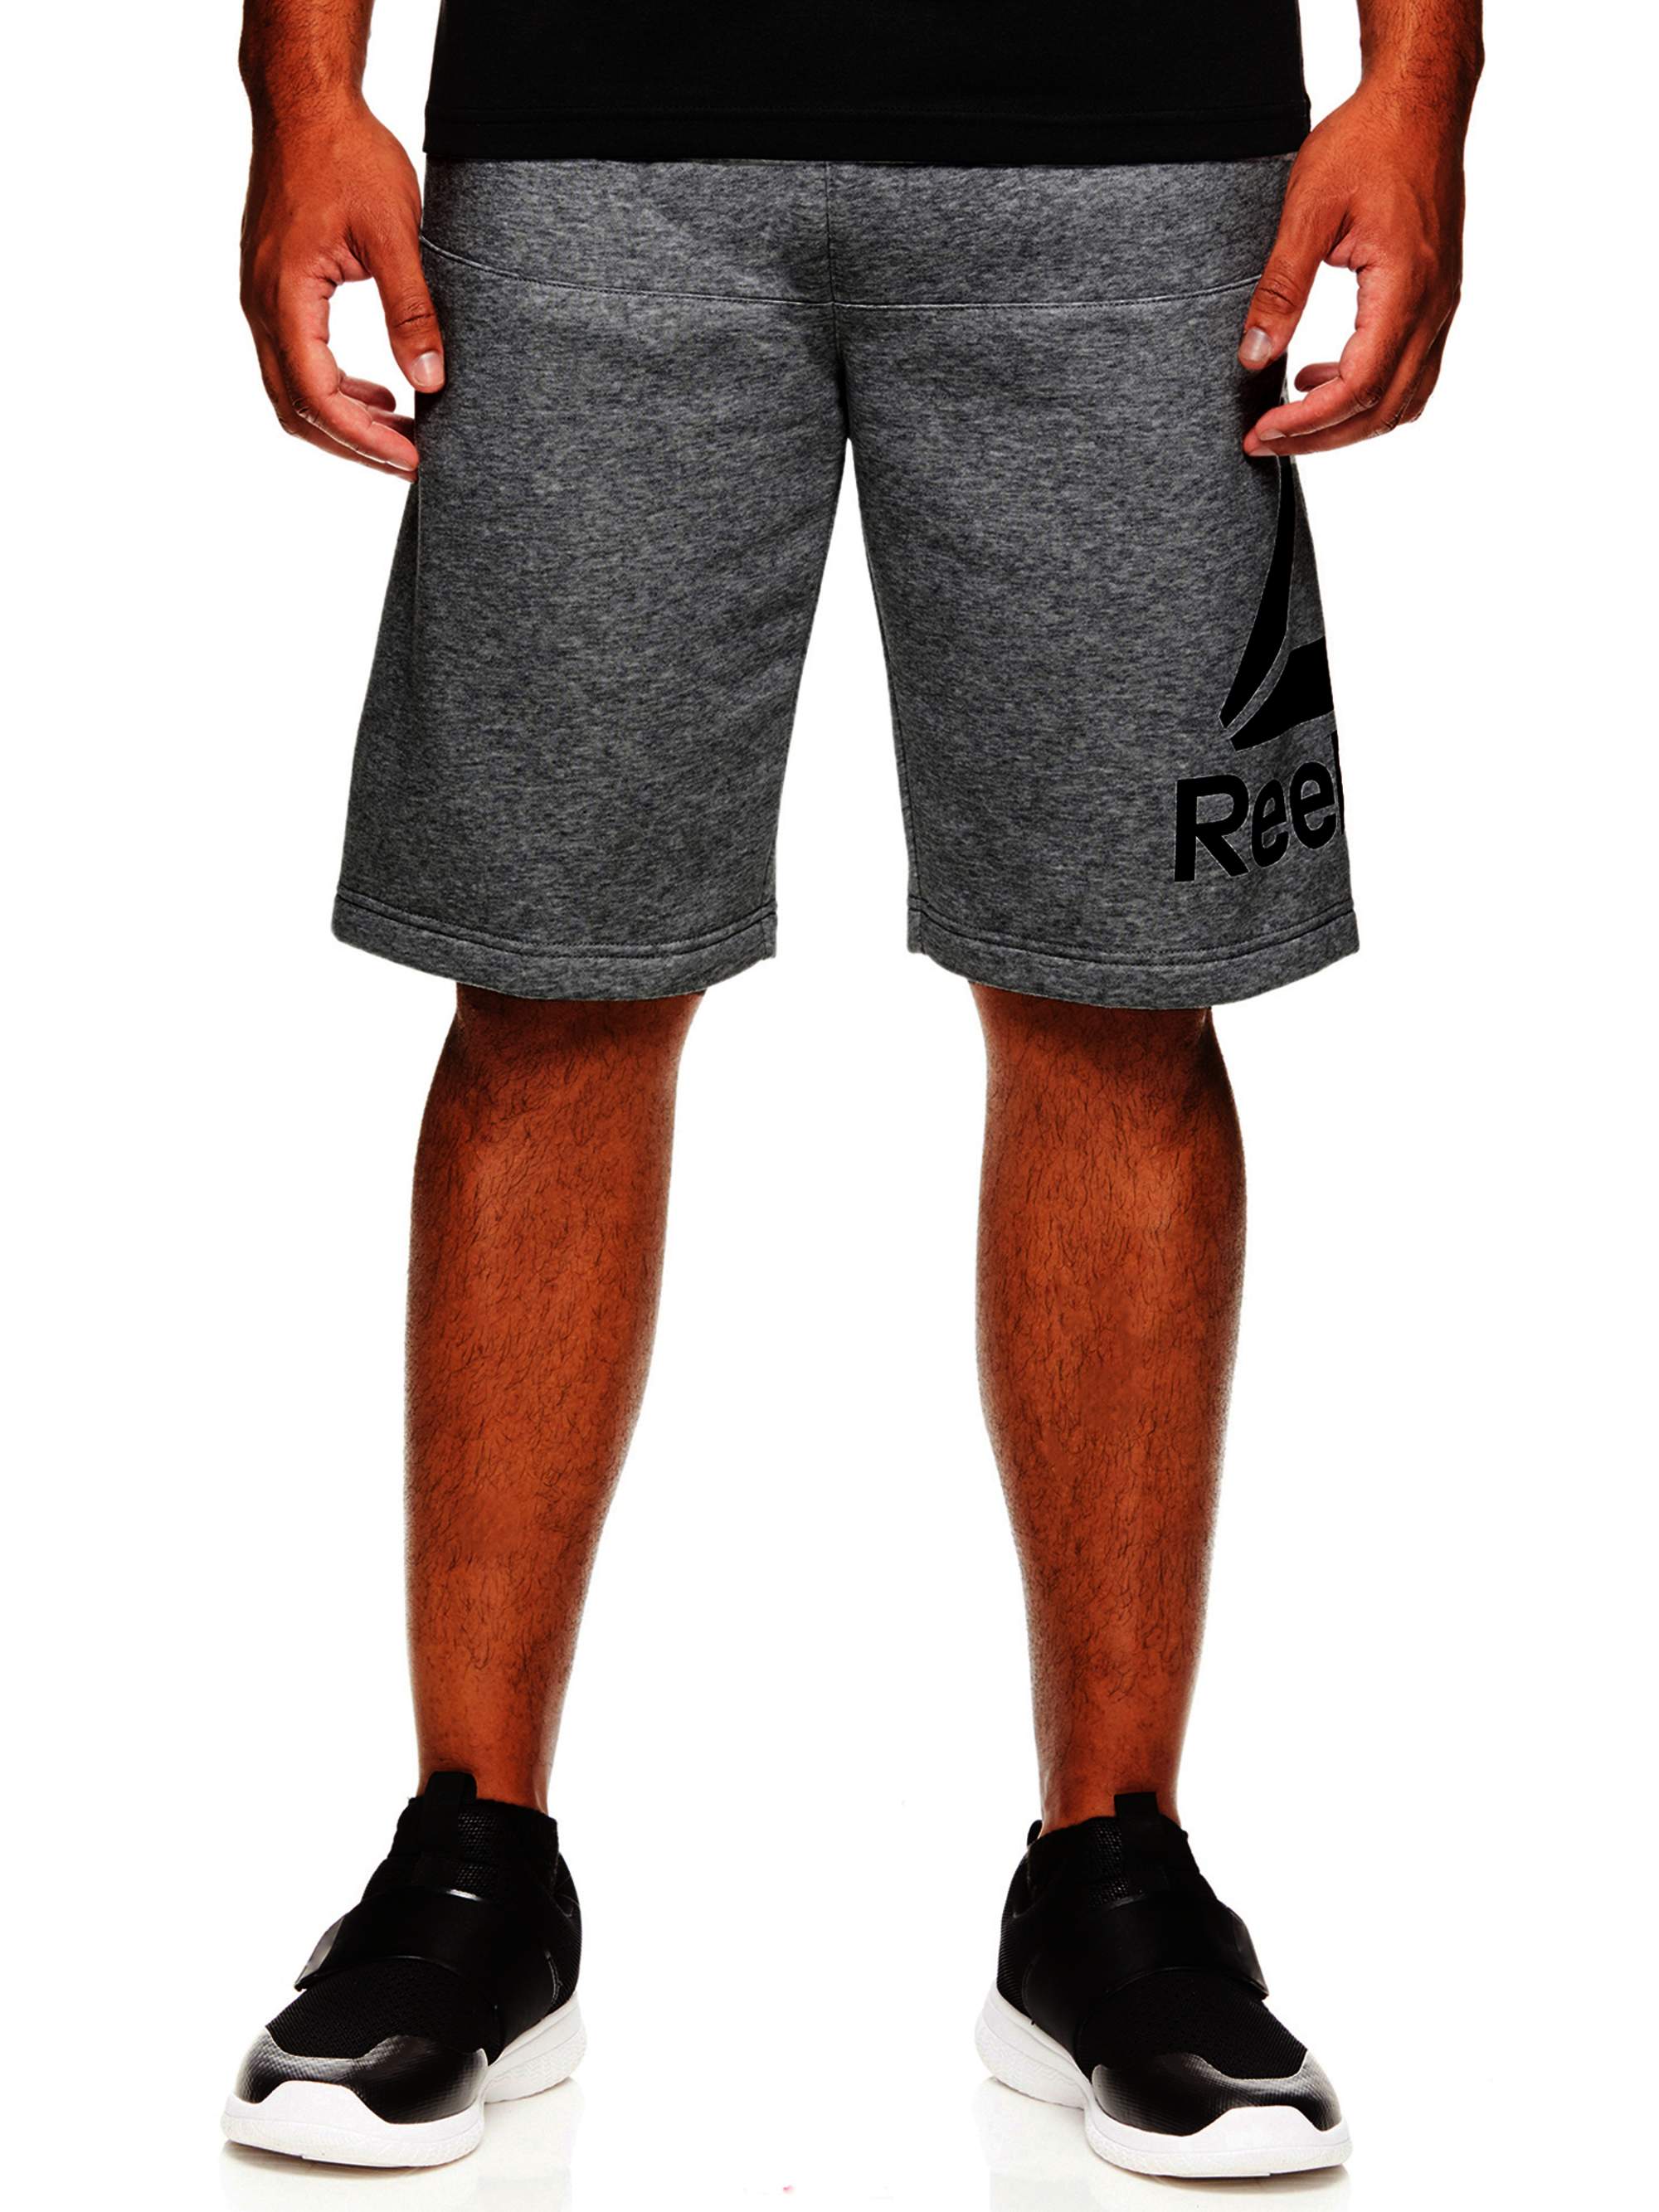 Reebok Men's Low Lift Fleece Shorts - image 1 of 1